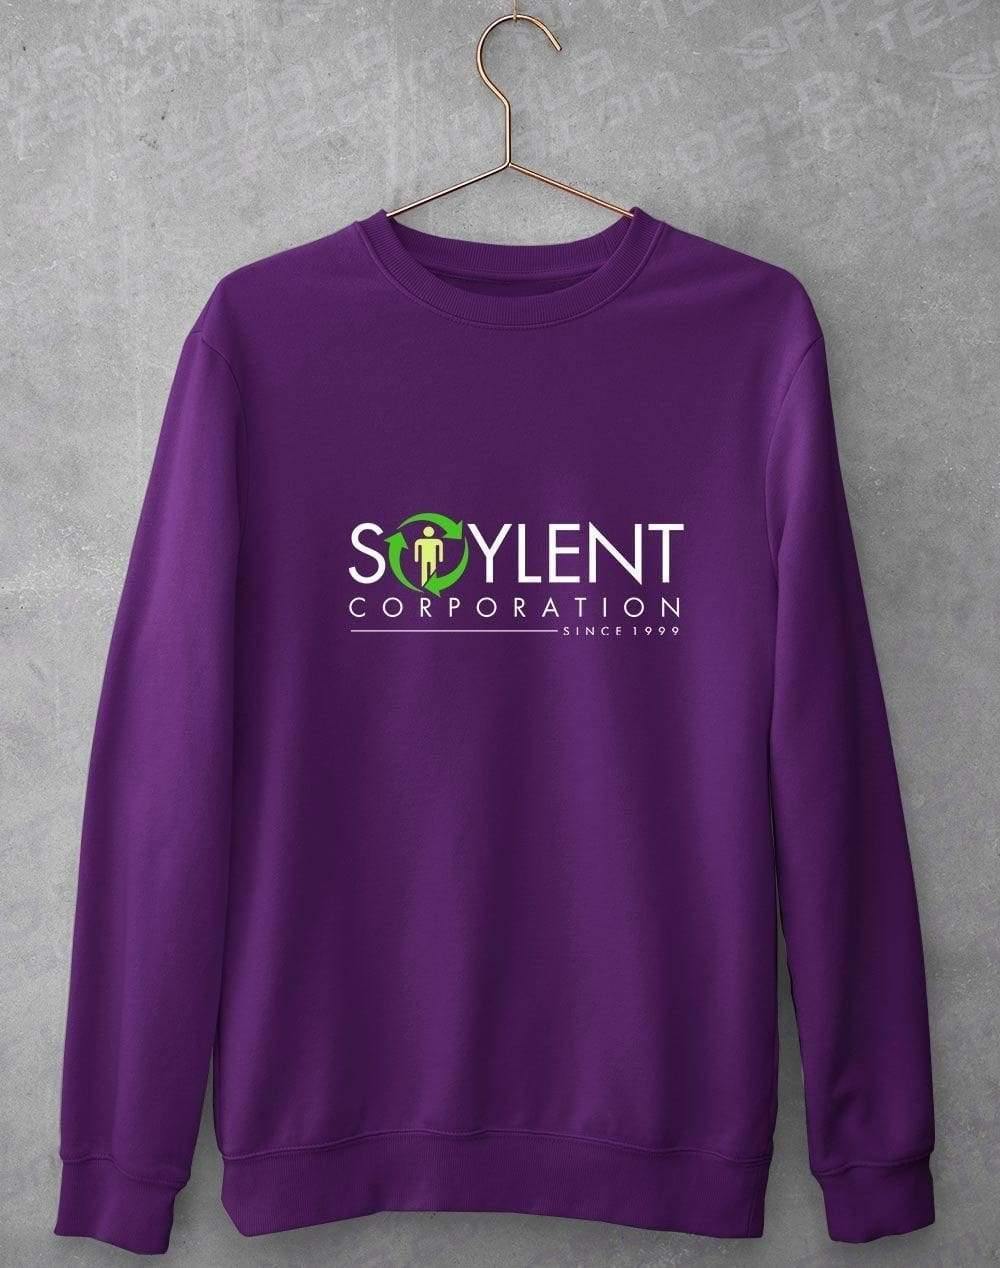 Soylent Corporation Sweatshirt S / Purple  - Off World Tees